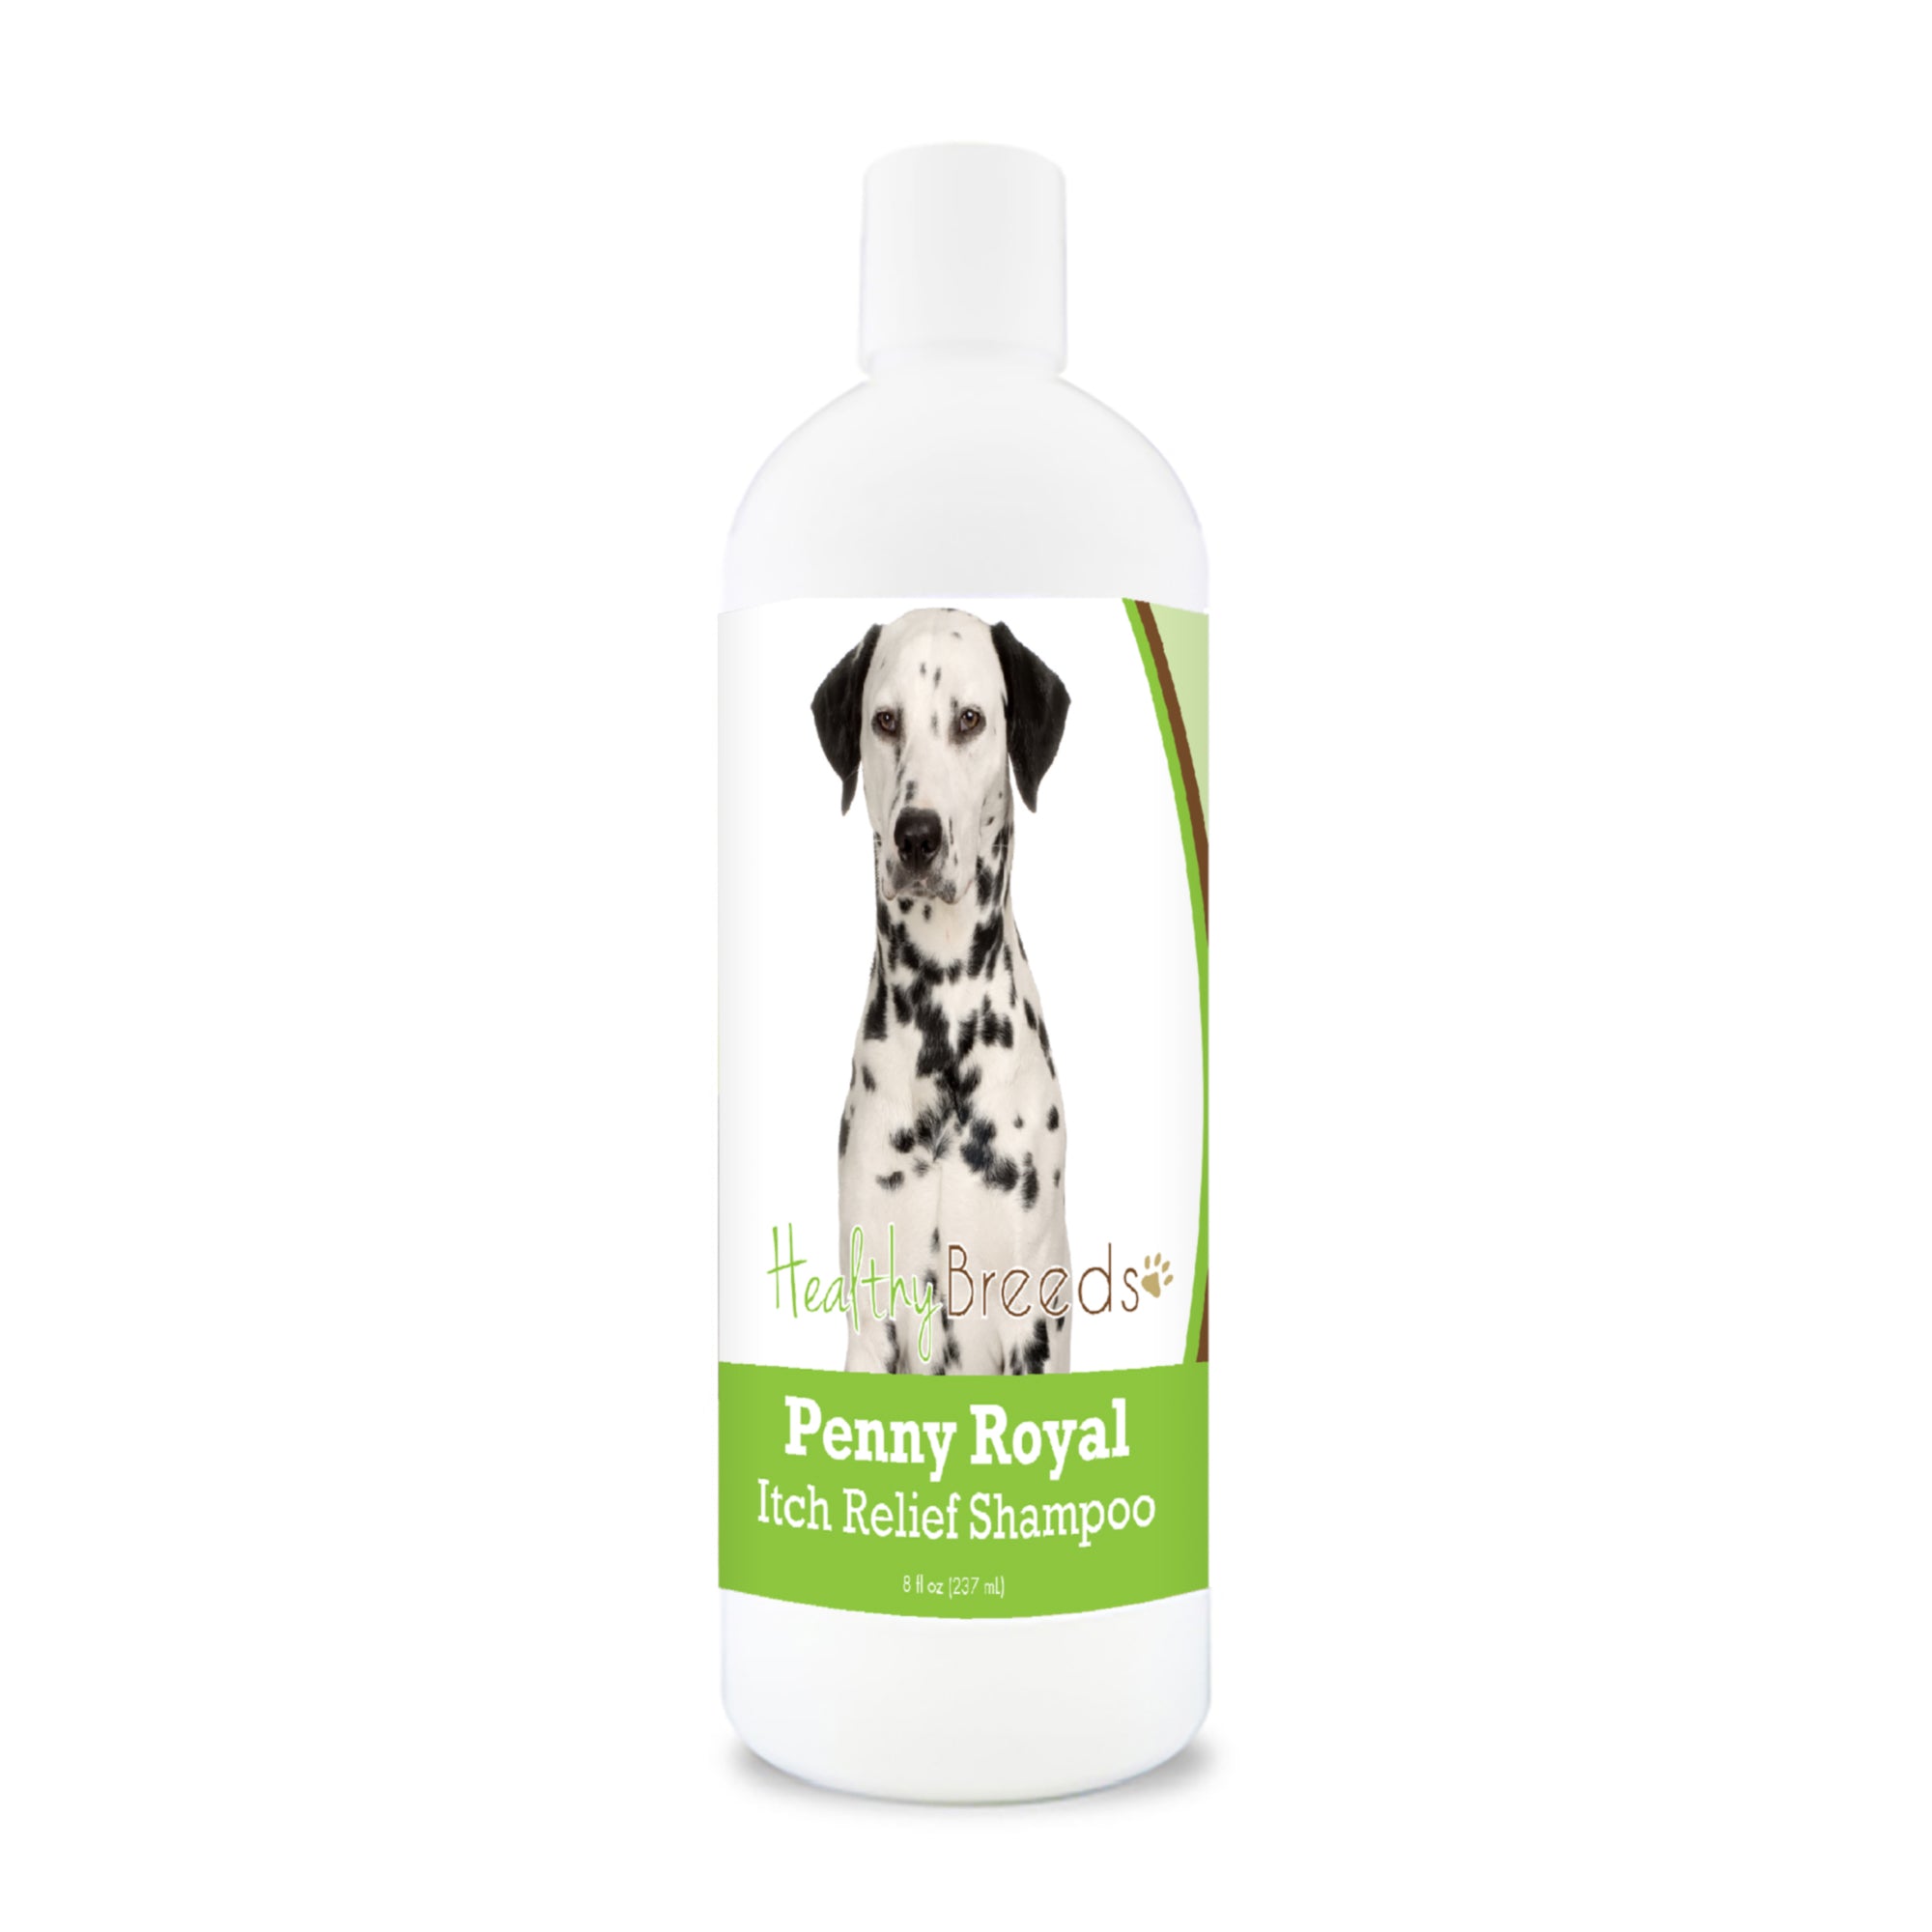 Dalmatian Penny Royal Itch Relief Shampoo 8 oz